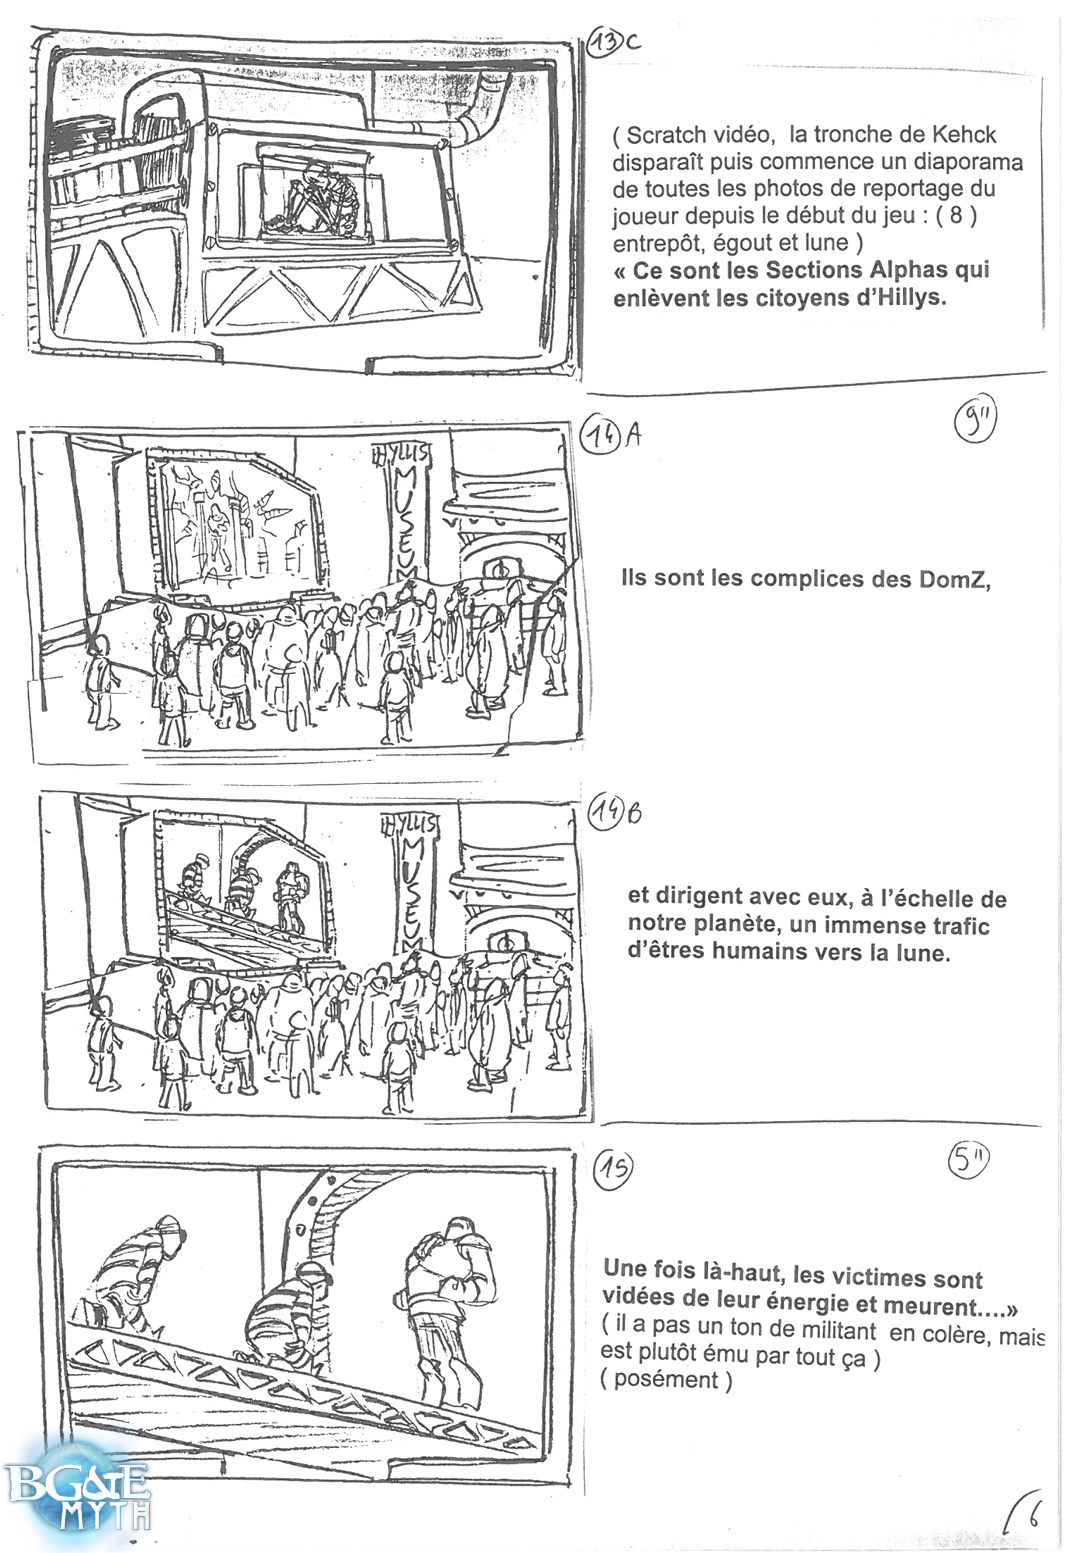 [Storyboard] Diffusion du reportage - Page 13